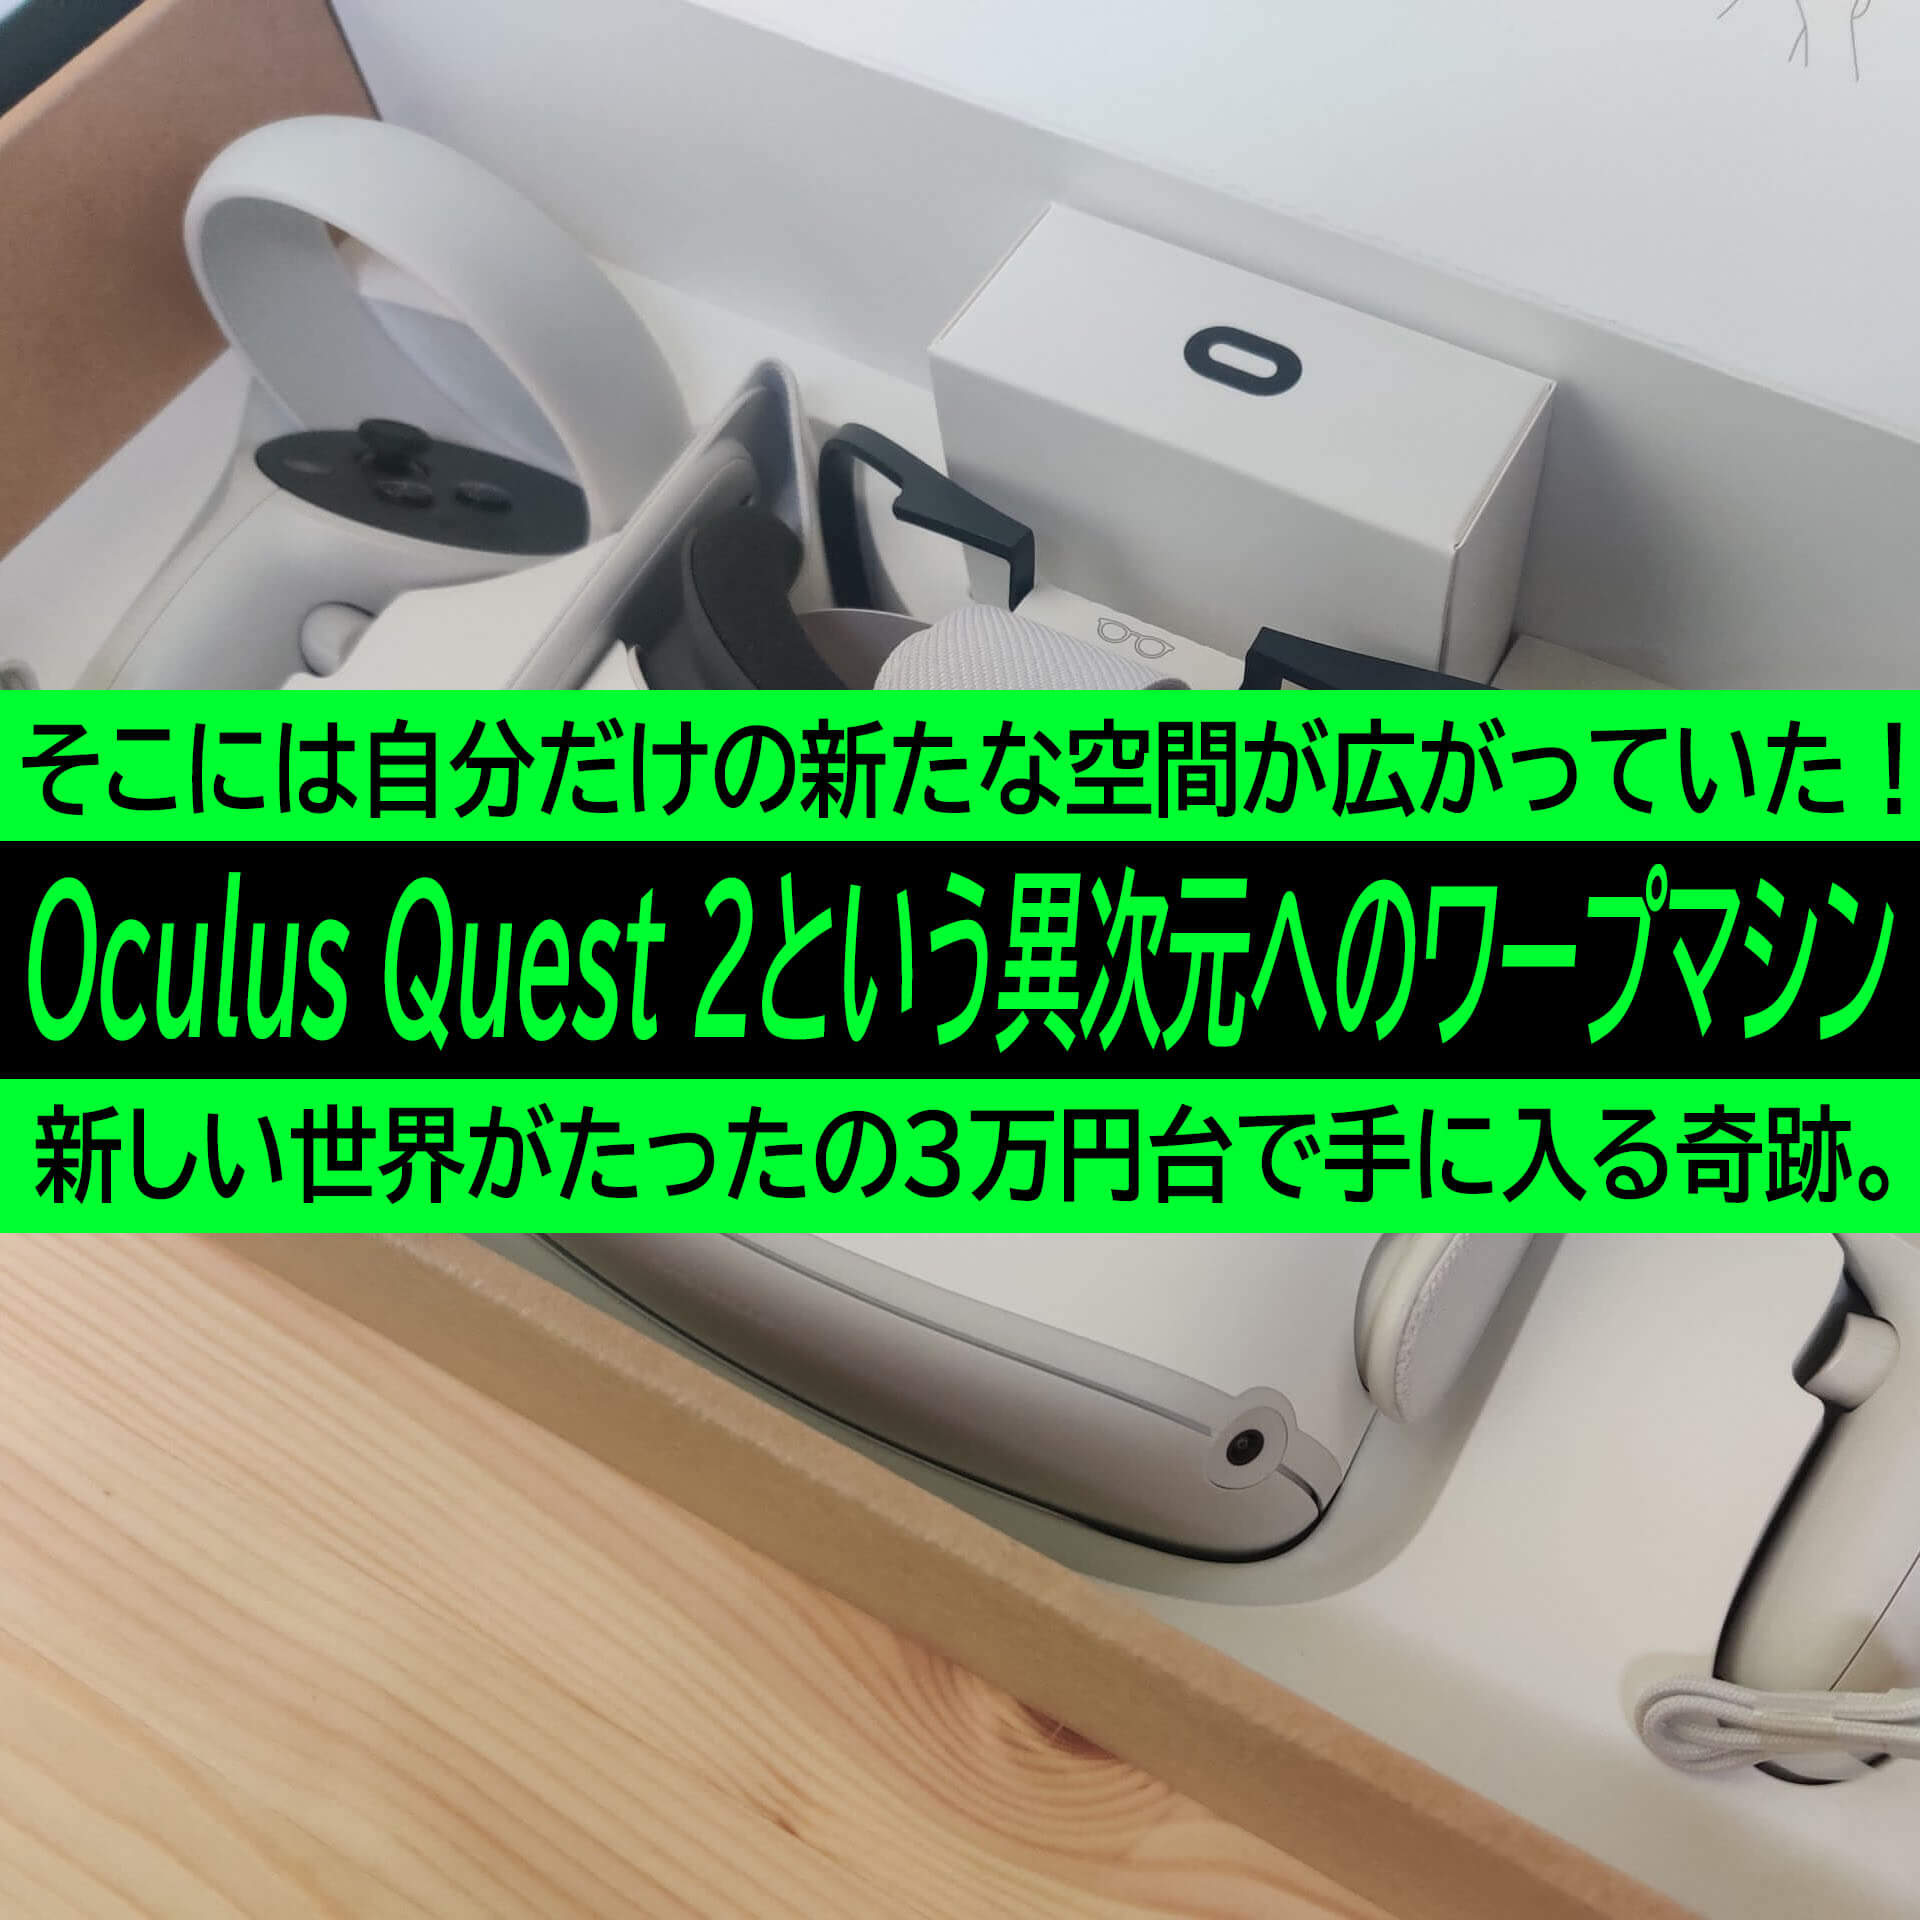 Oculus Quest 2という異次元へのワープマシンを手に入れた！空間が何倍